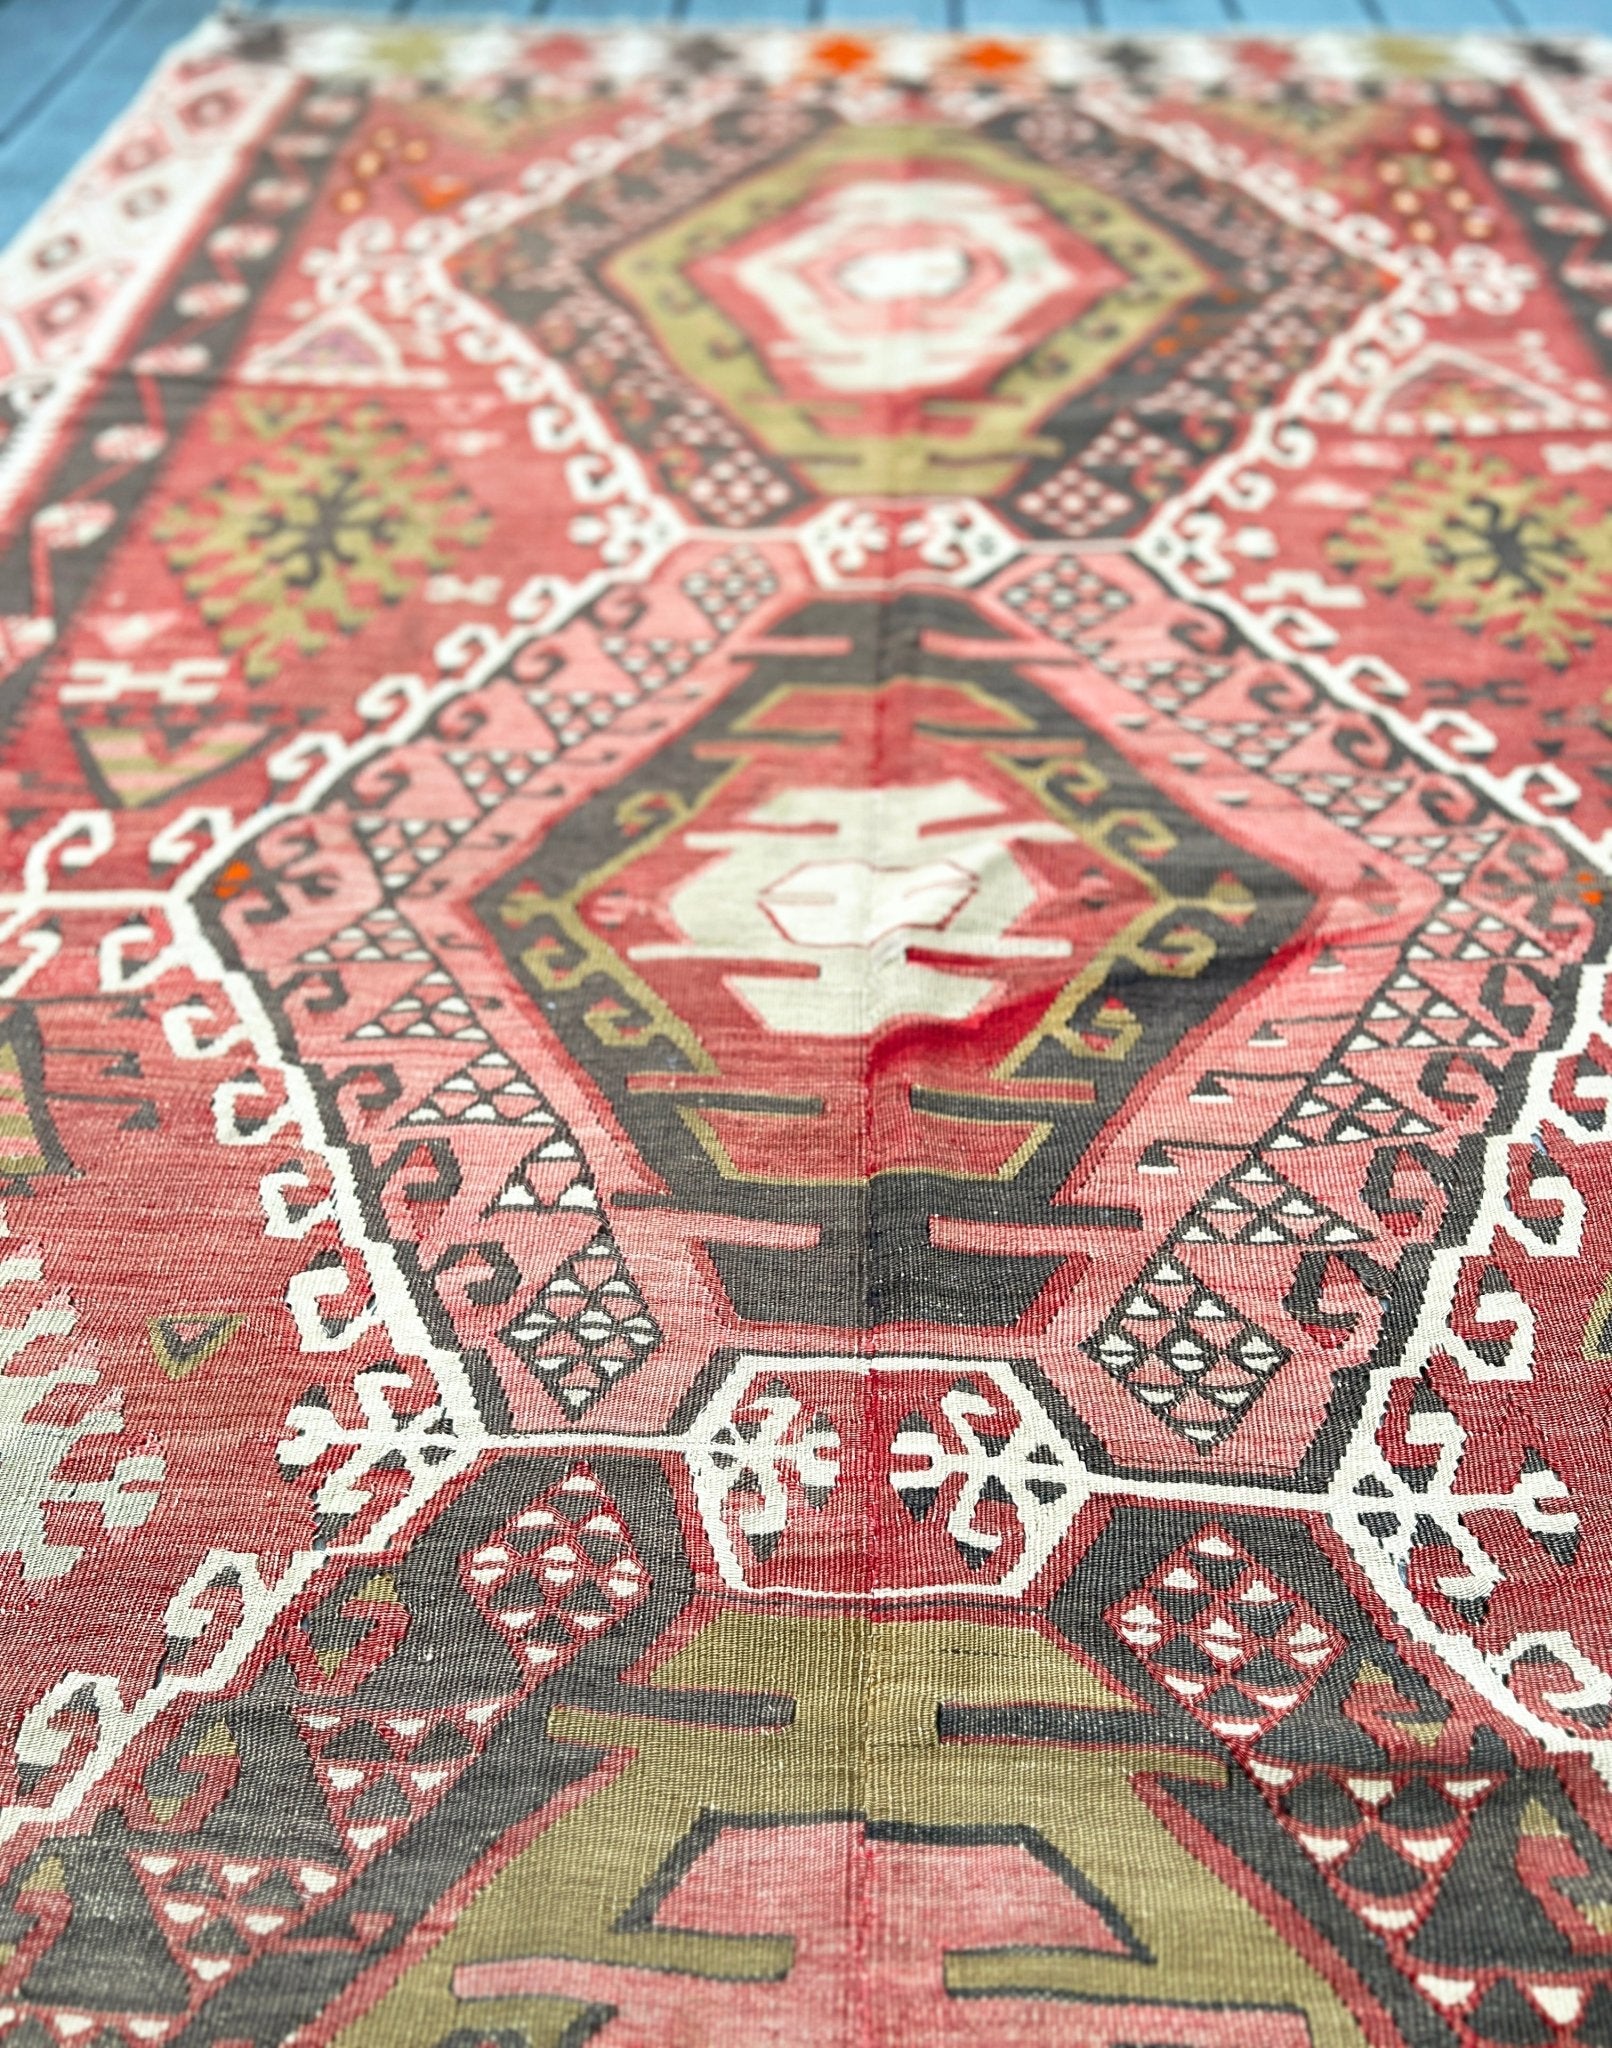 kayseri turkish wide runner kilim rug shop berkeley palo alto SF bay area. Buy kilim rug online Canada, USA, toronto, oregon.